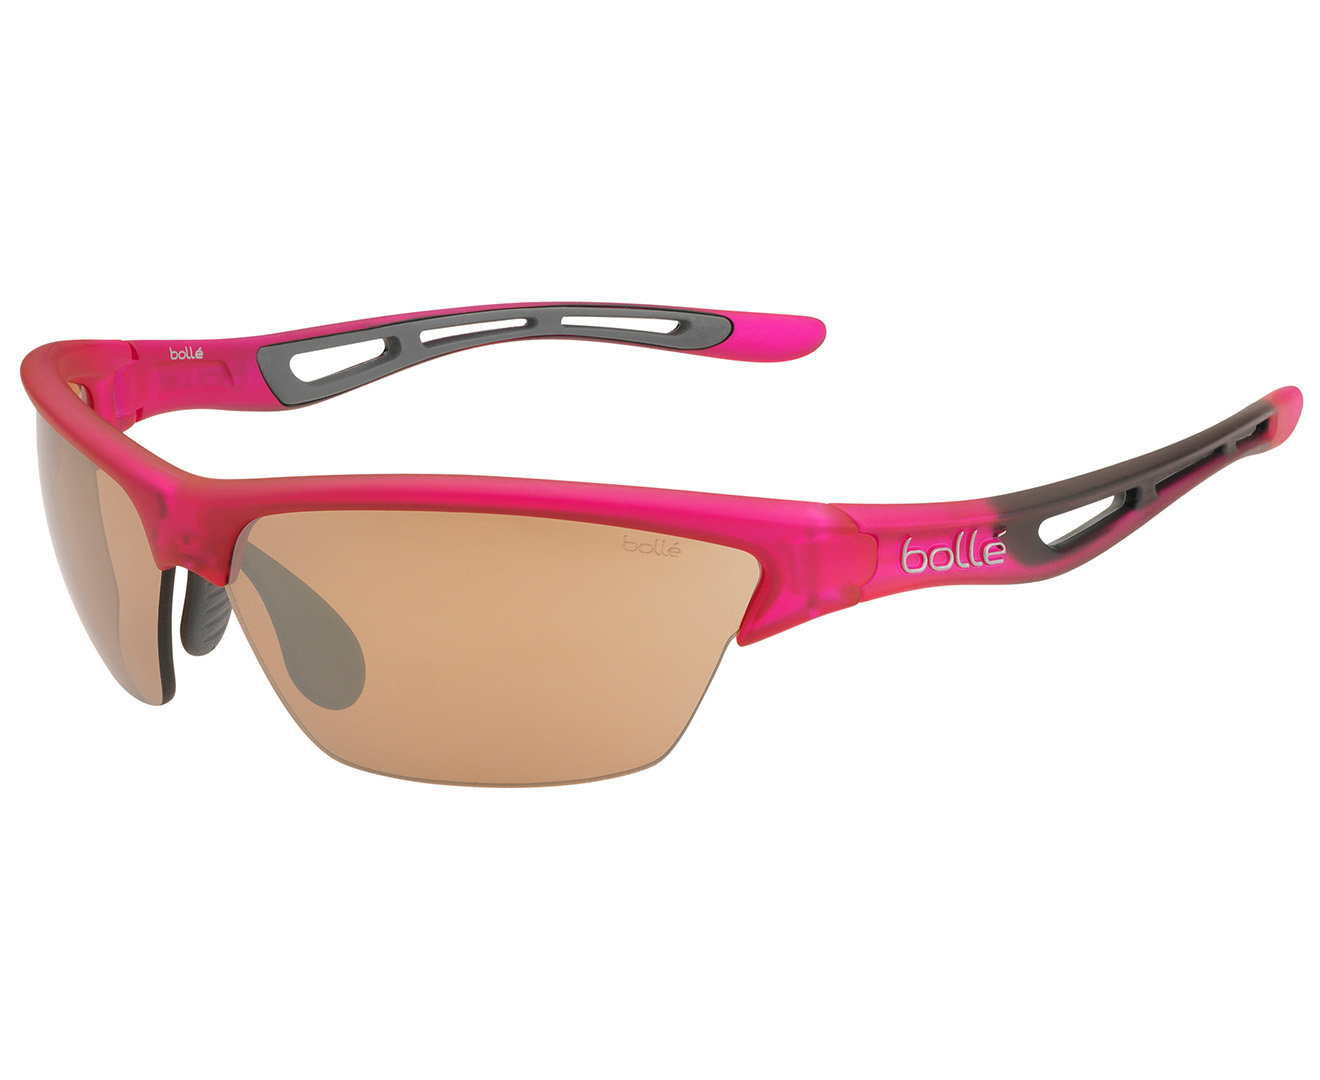 Bollé Men's Tempest Golf Sunglasses - Satin Pink | Catch.com.au